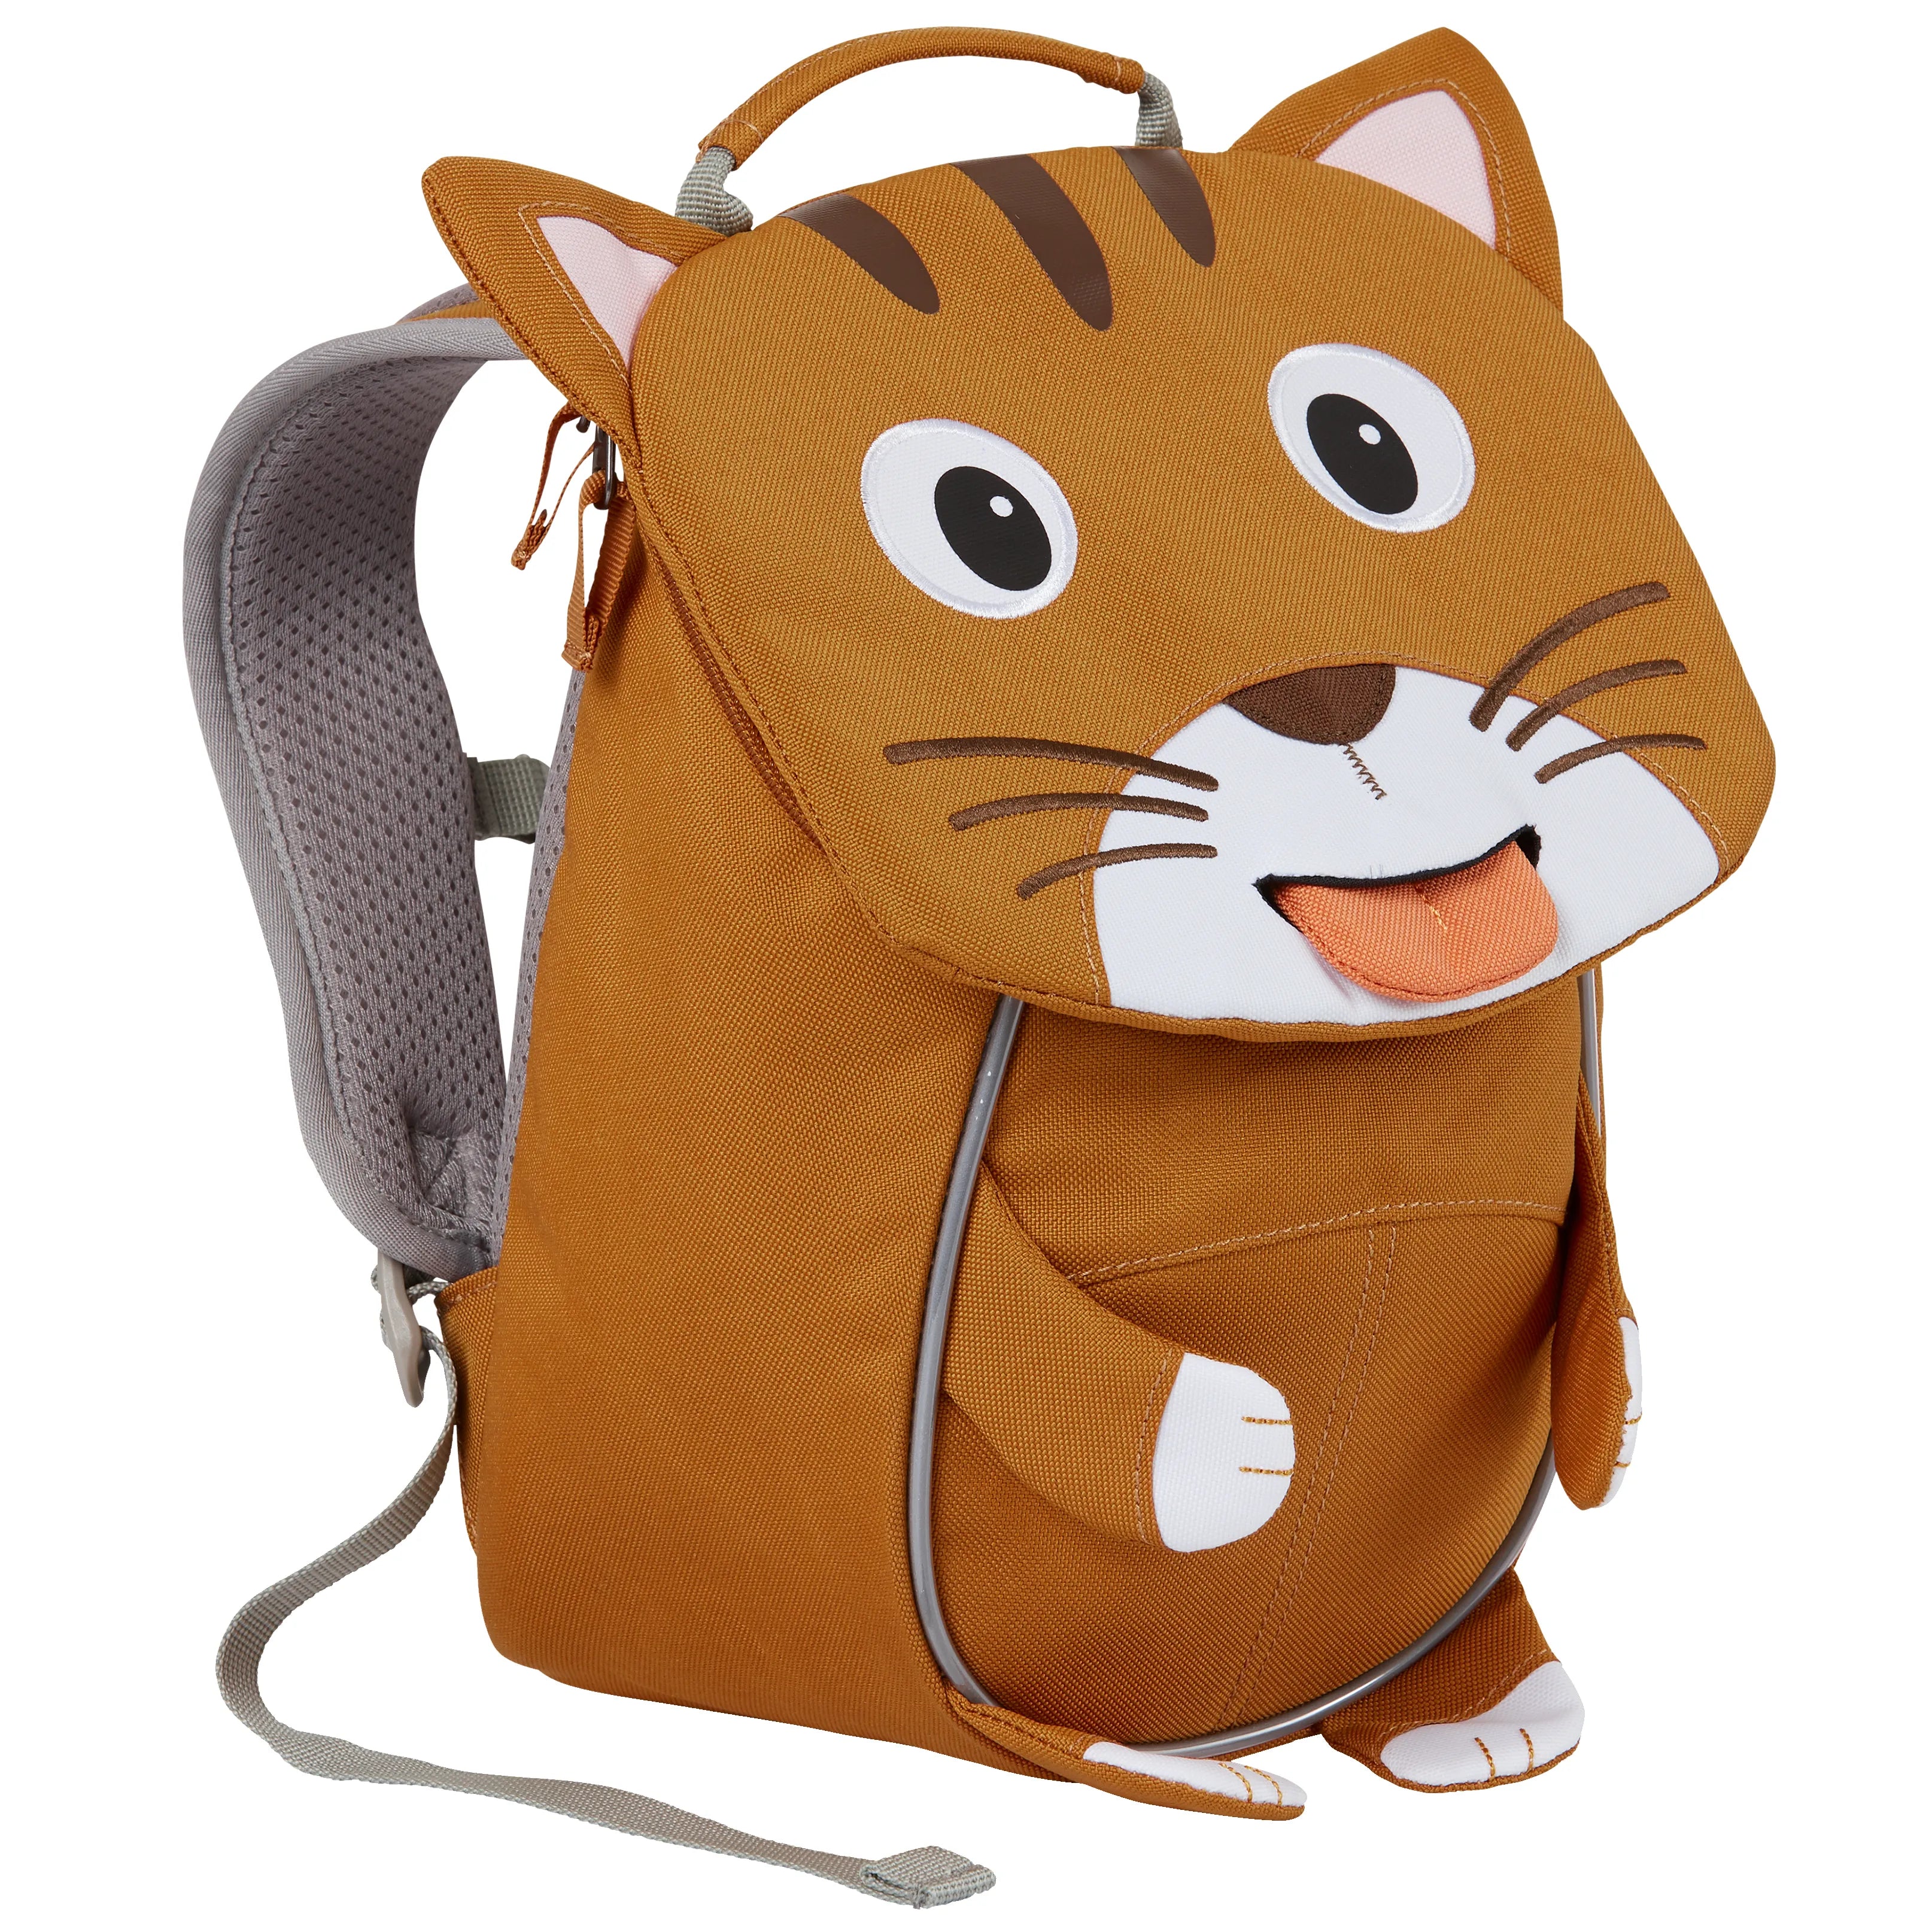 Affenzahn Small Friend children's backpack 27 cm - Tonie Mouse